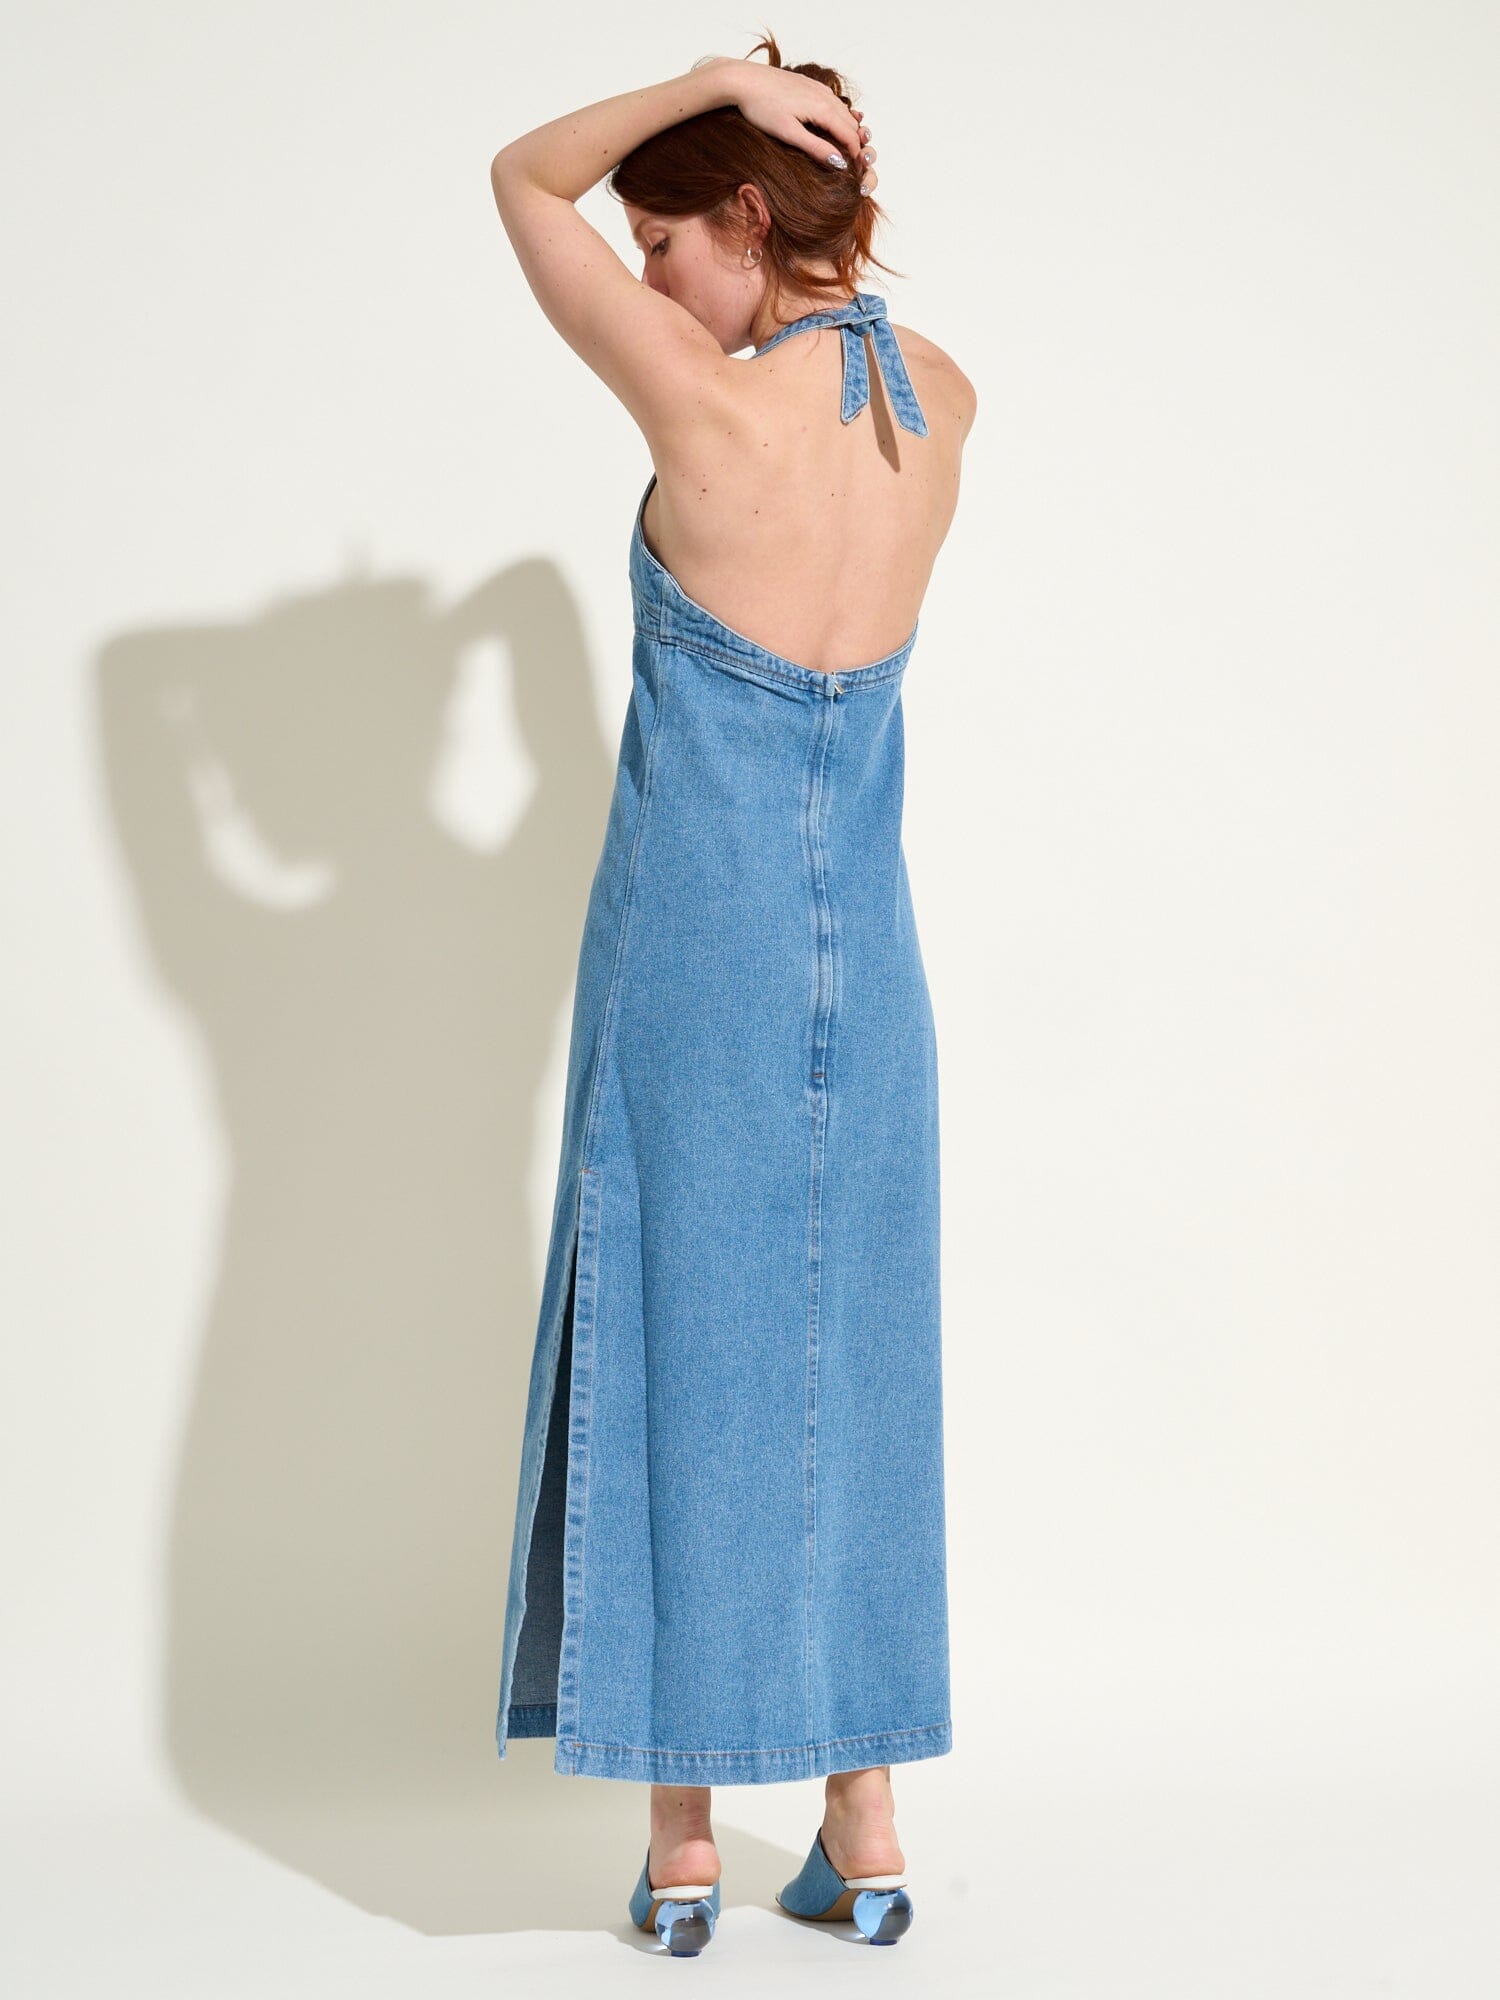 ELISABETH - Halter Tie Midi Dress in Washed Denim Oeko-Tex Blue Dress Fête Impériale